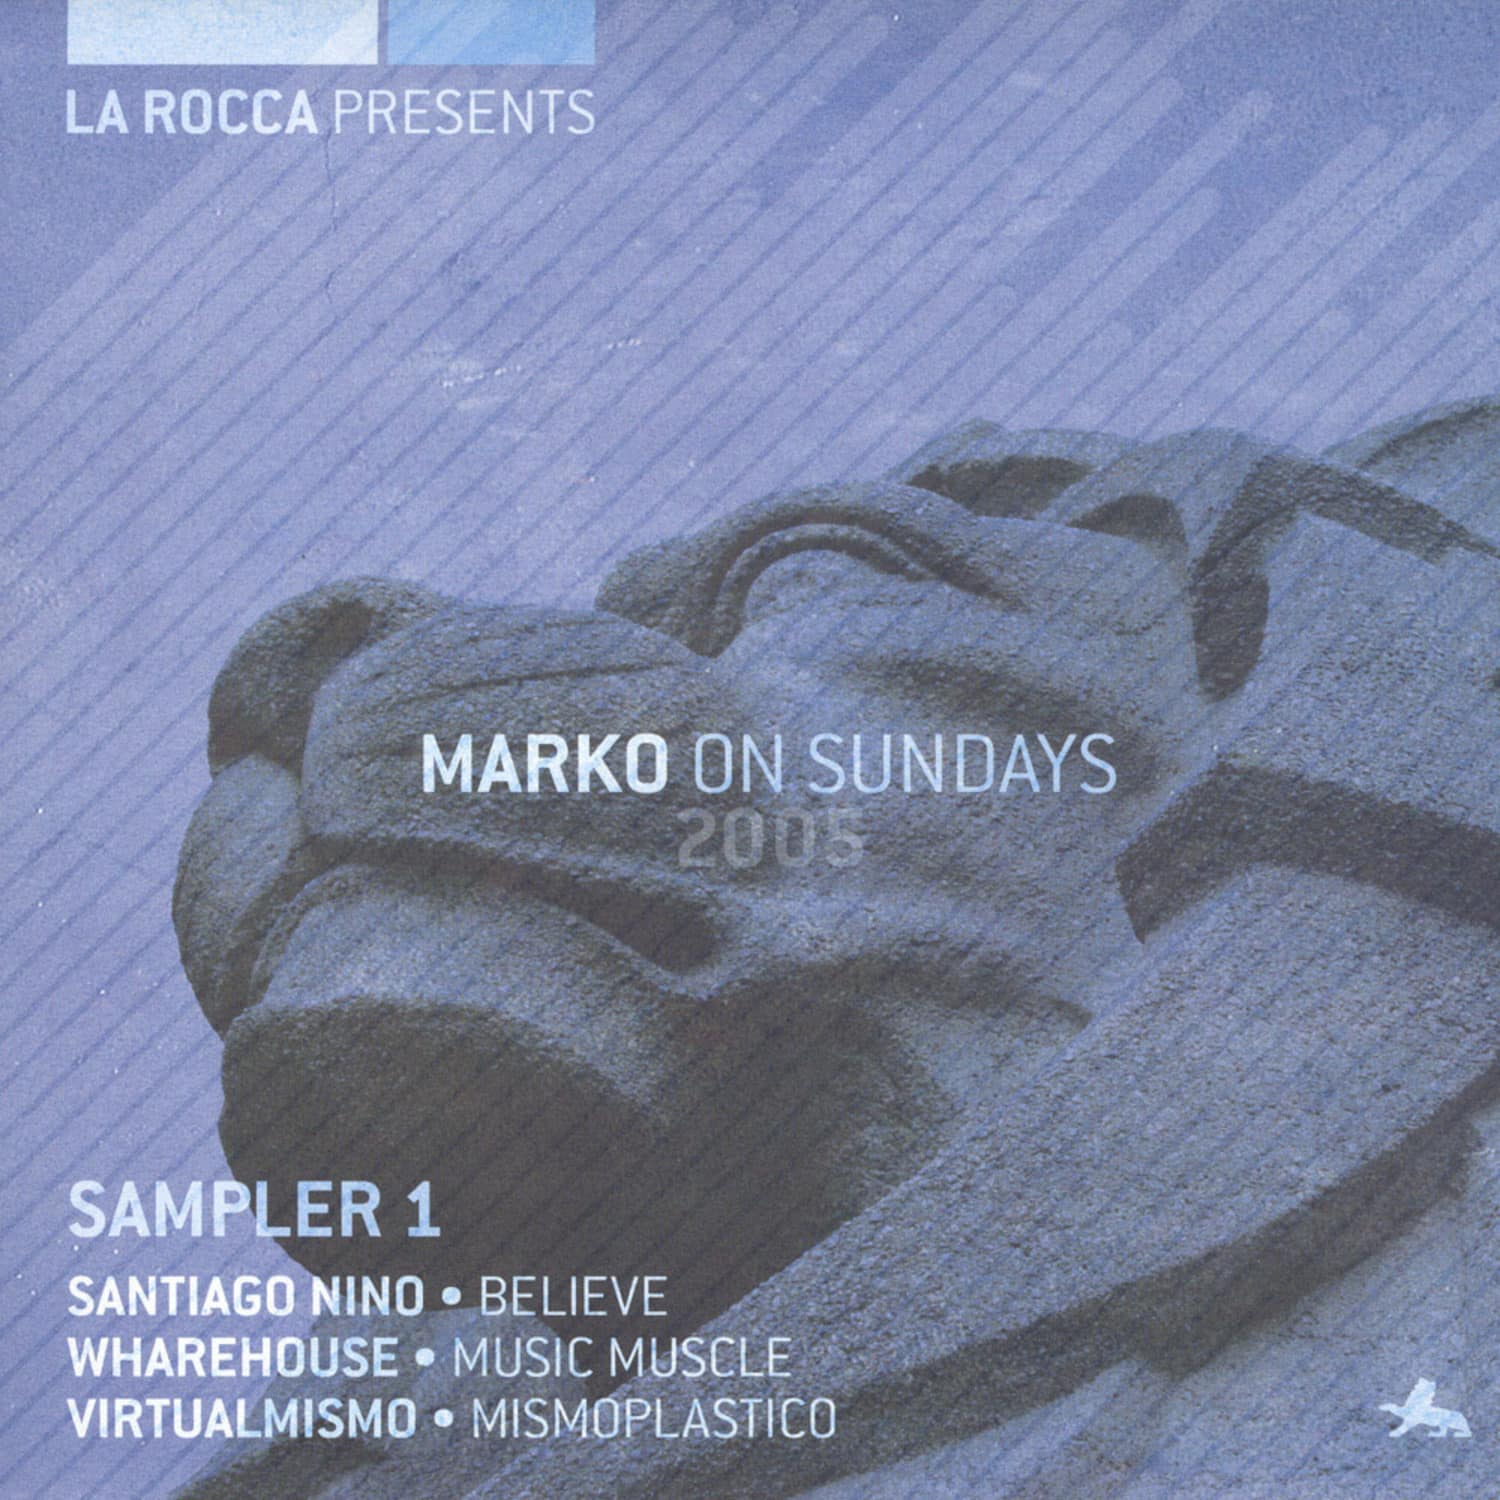 La Rocca Presents Marco On Sundays 2005 - SAMPLER 1